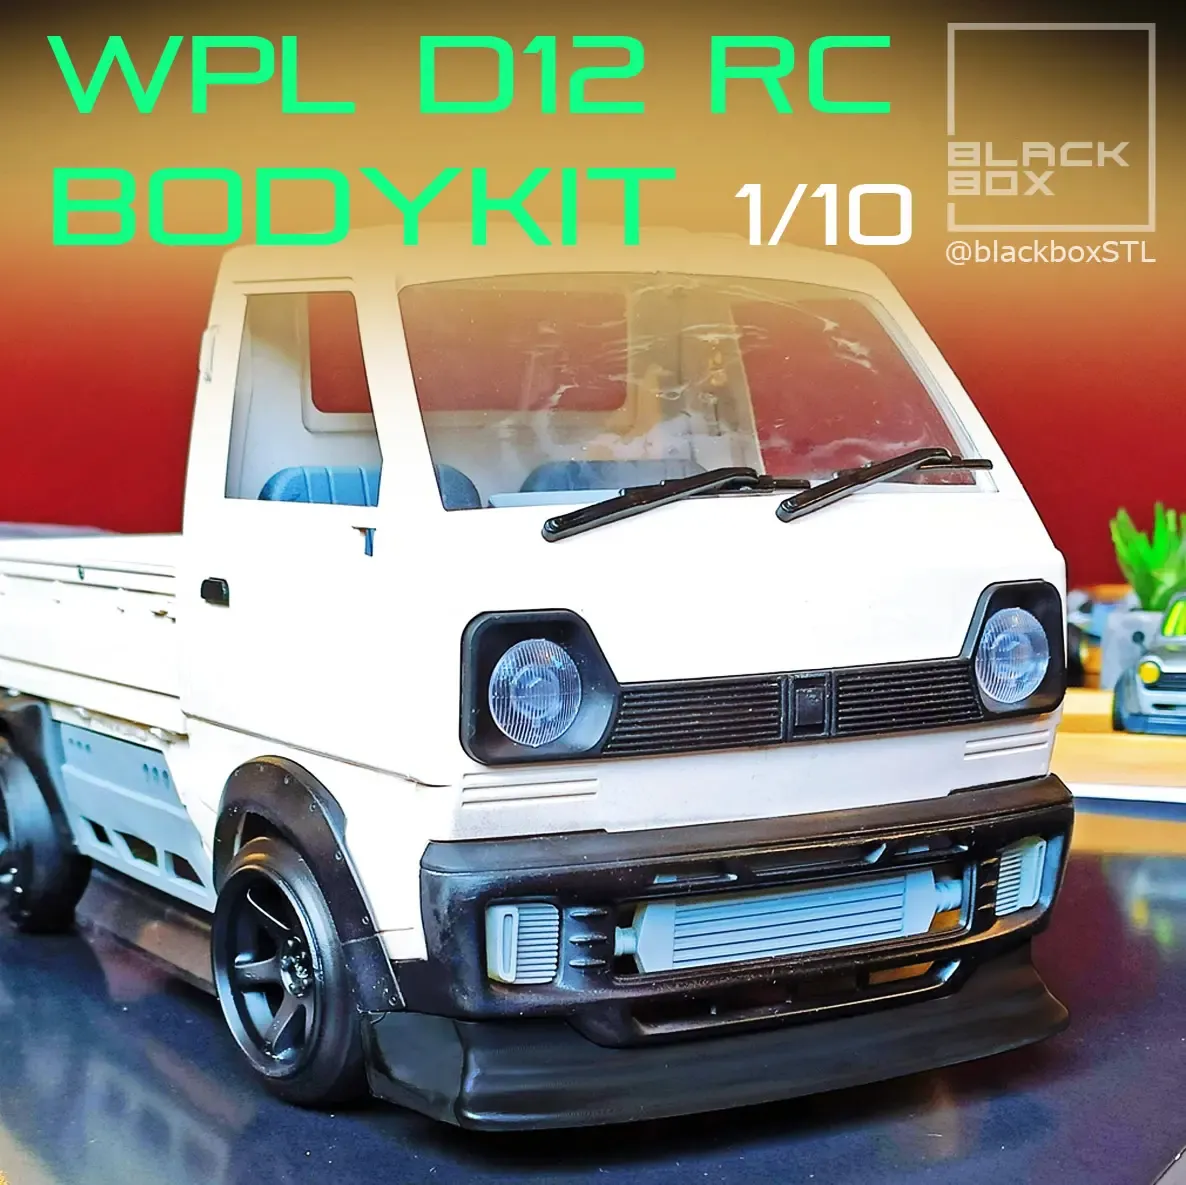 WPL D12 RC BODYKIT B004 BY BLACKBOX